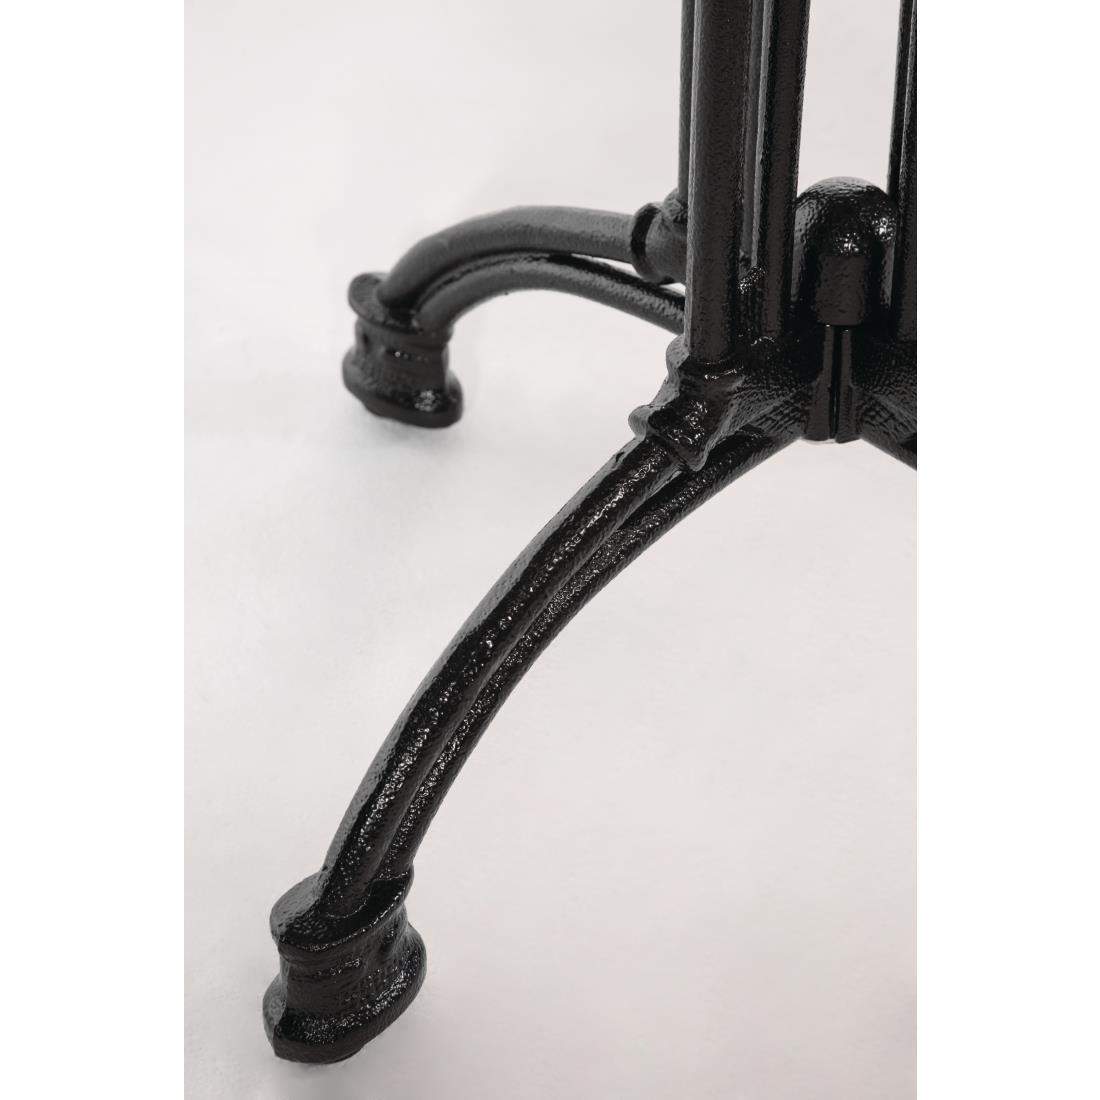 Bolero Cast Iron Decorative Brasserie Table Leg Base - HC298  - 3